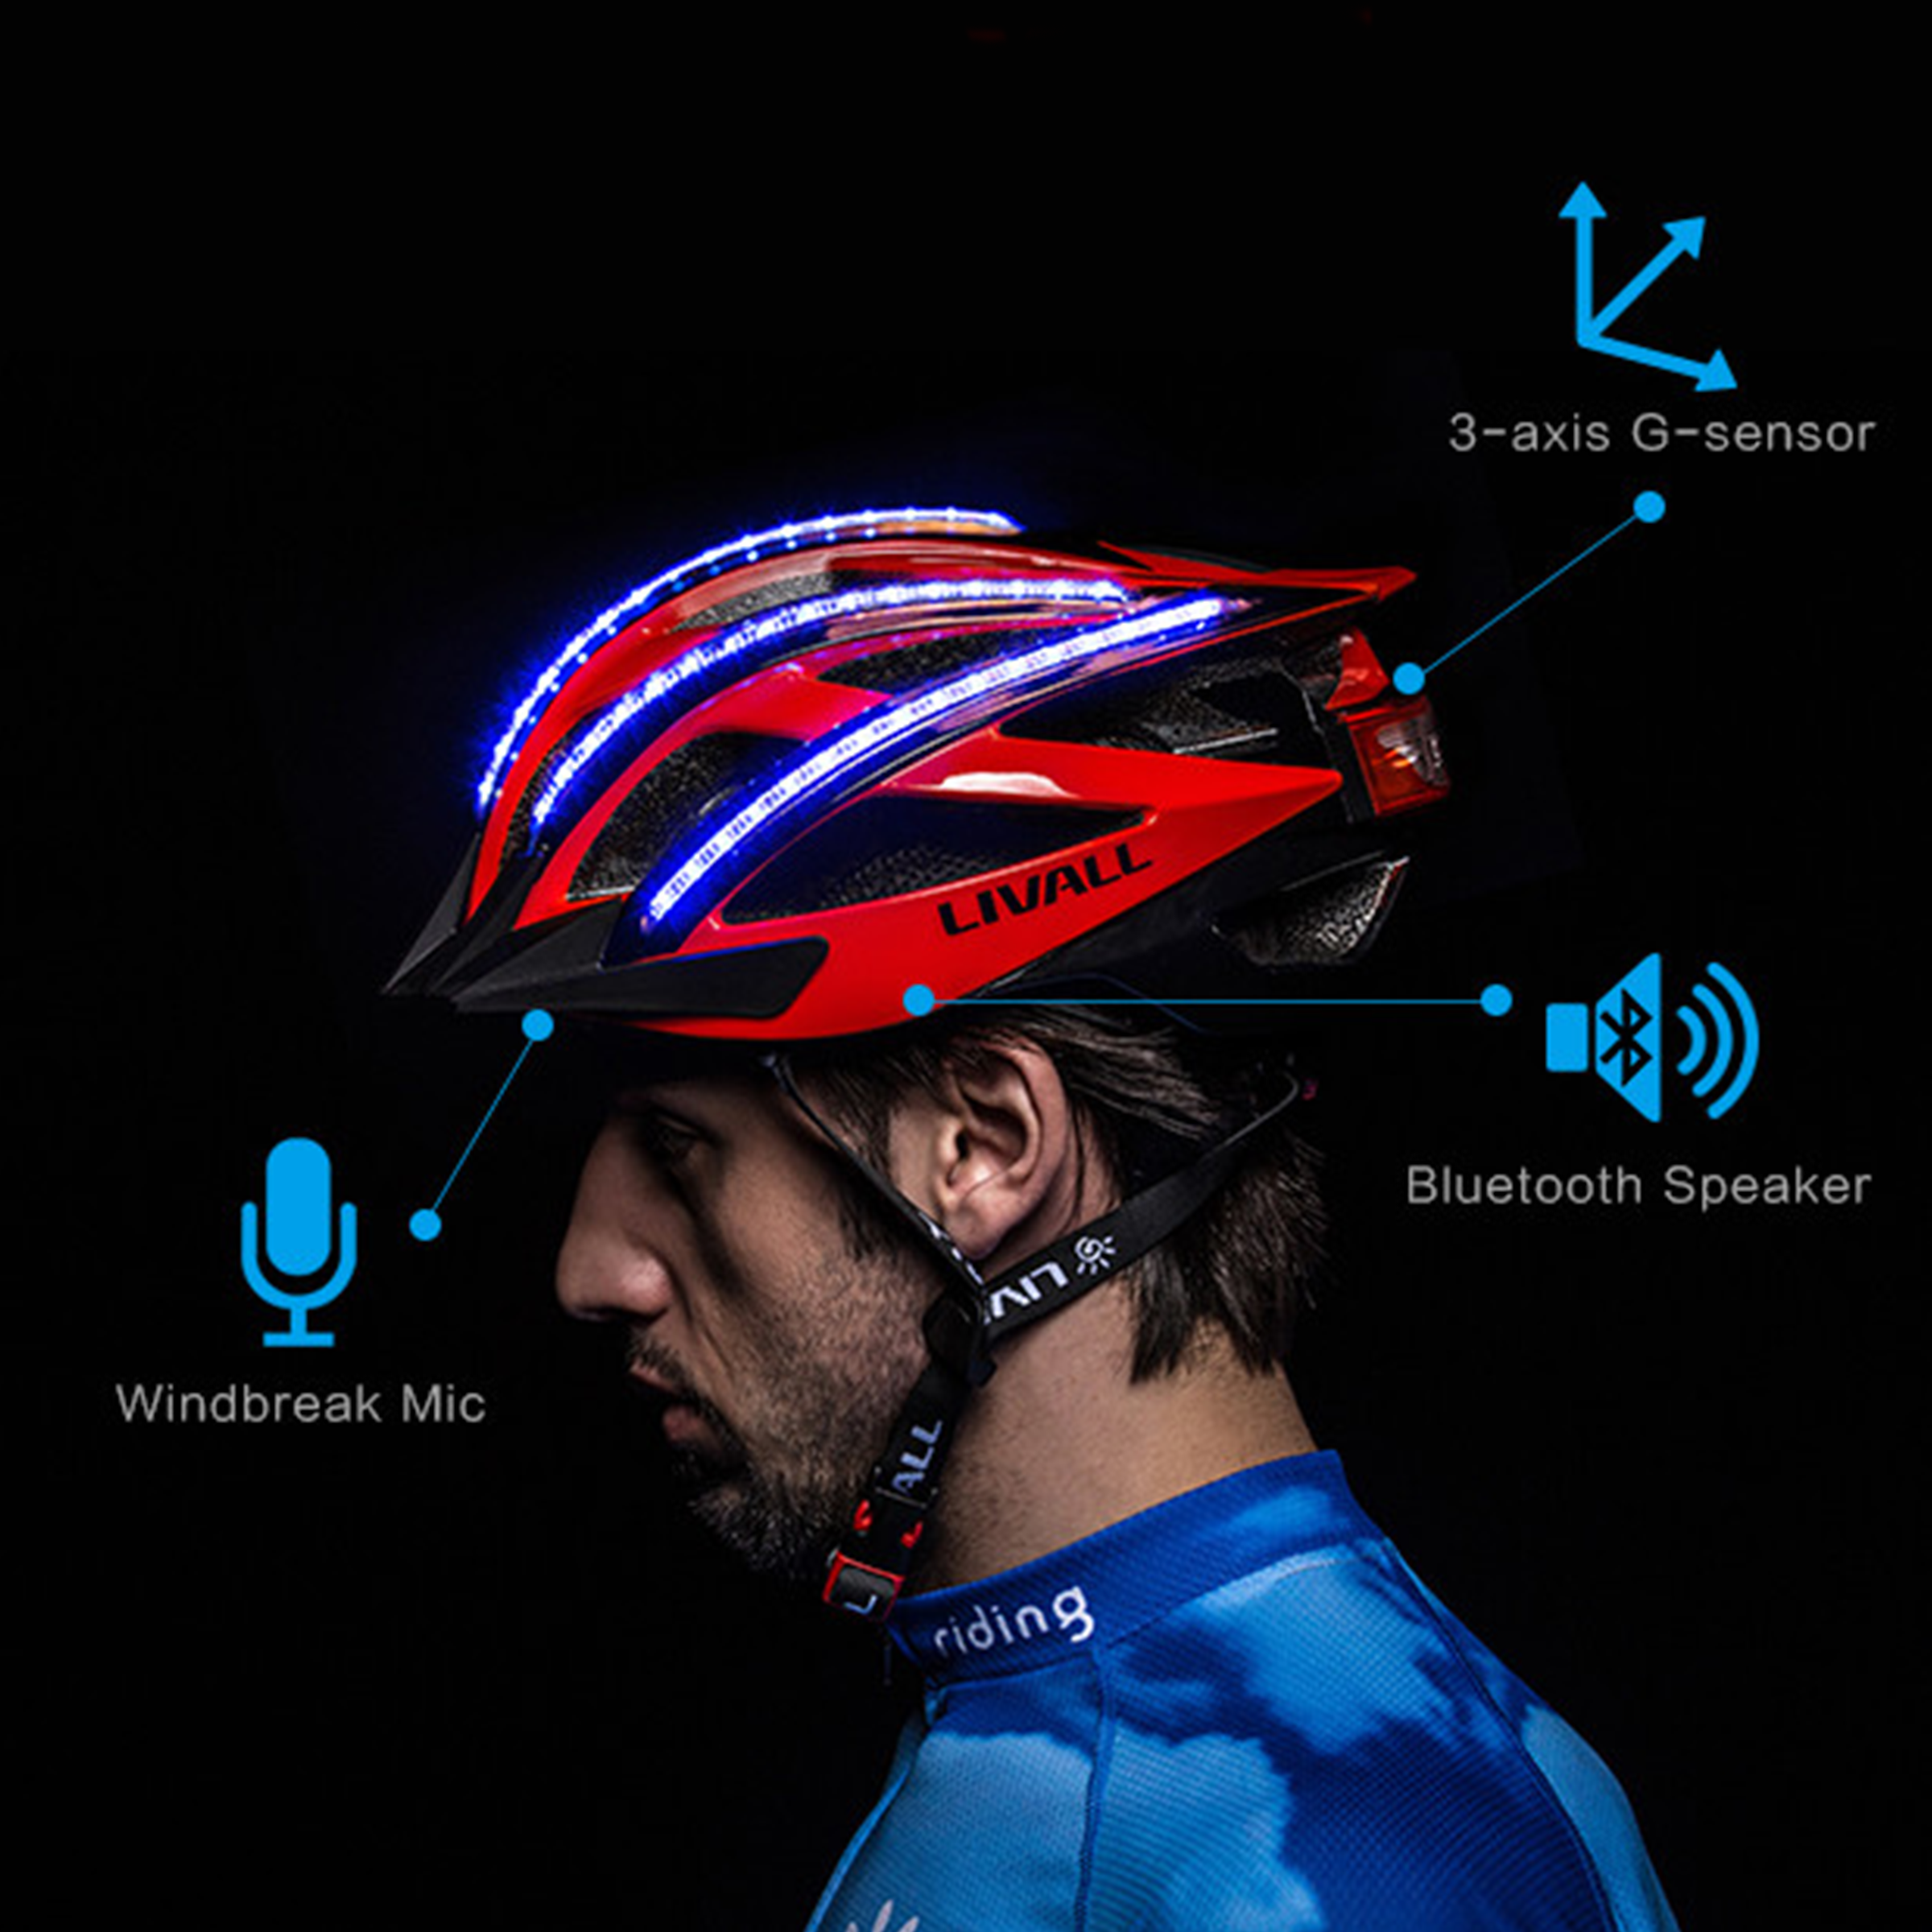 livall smart cycling helmet.